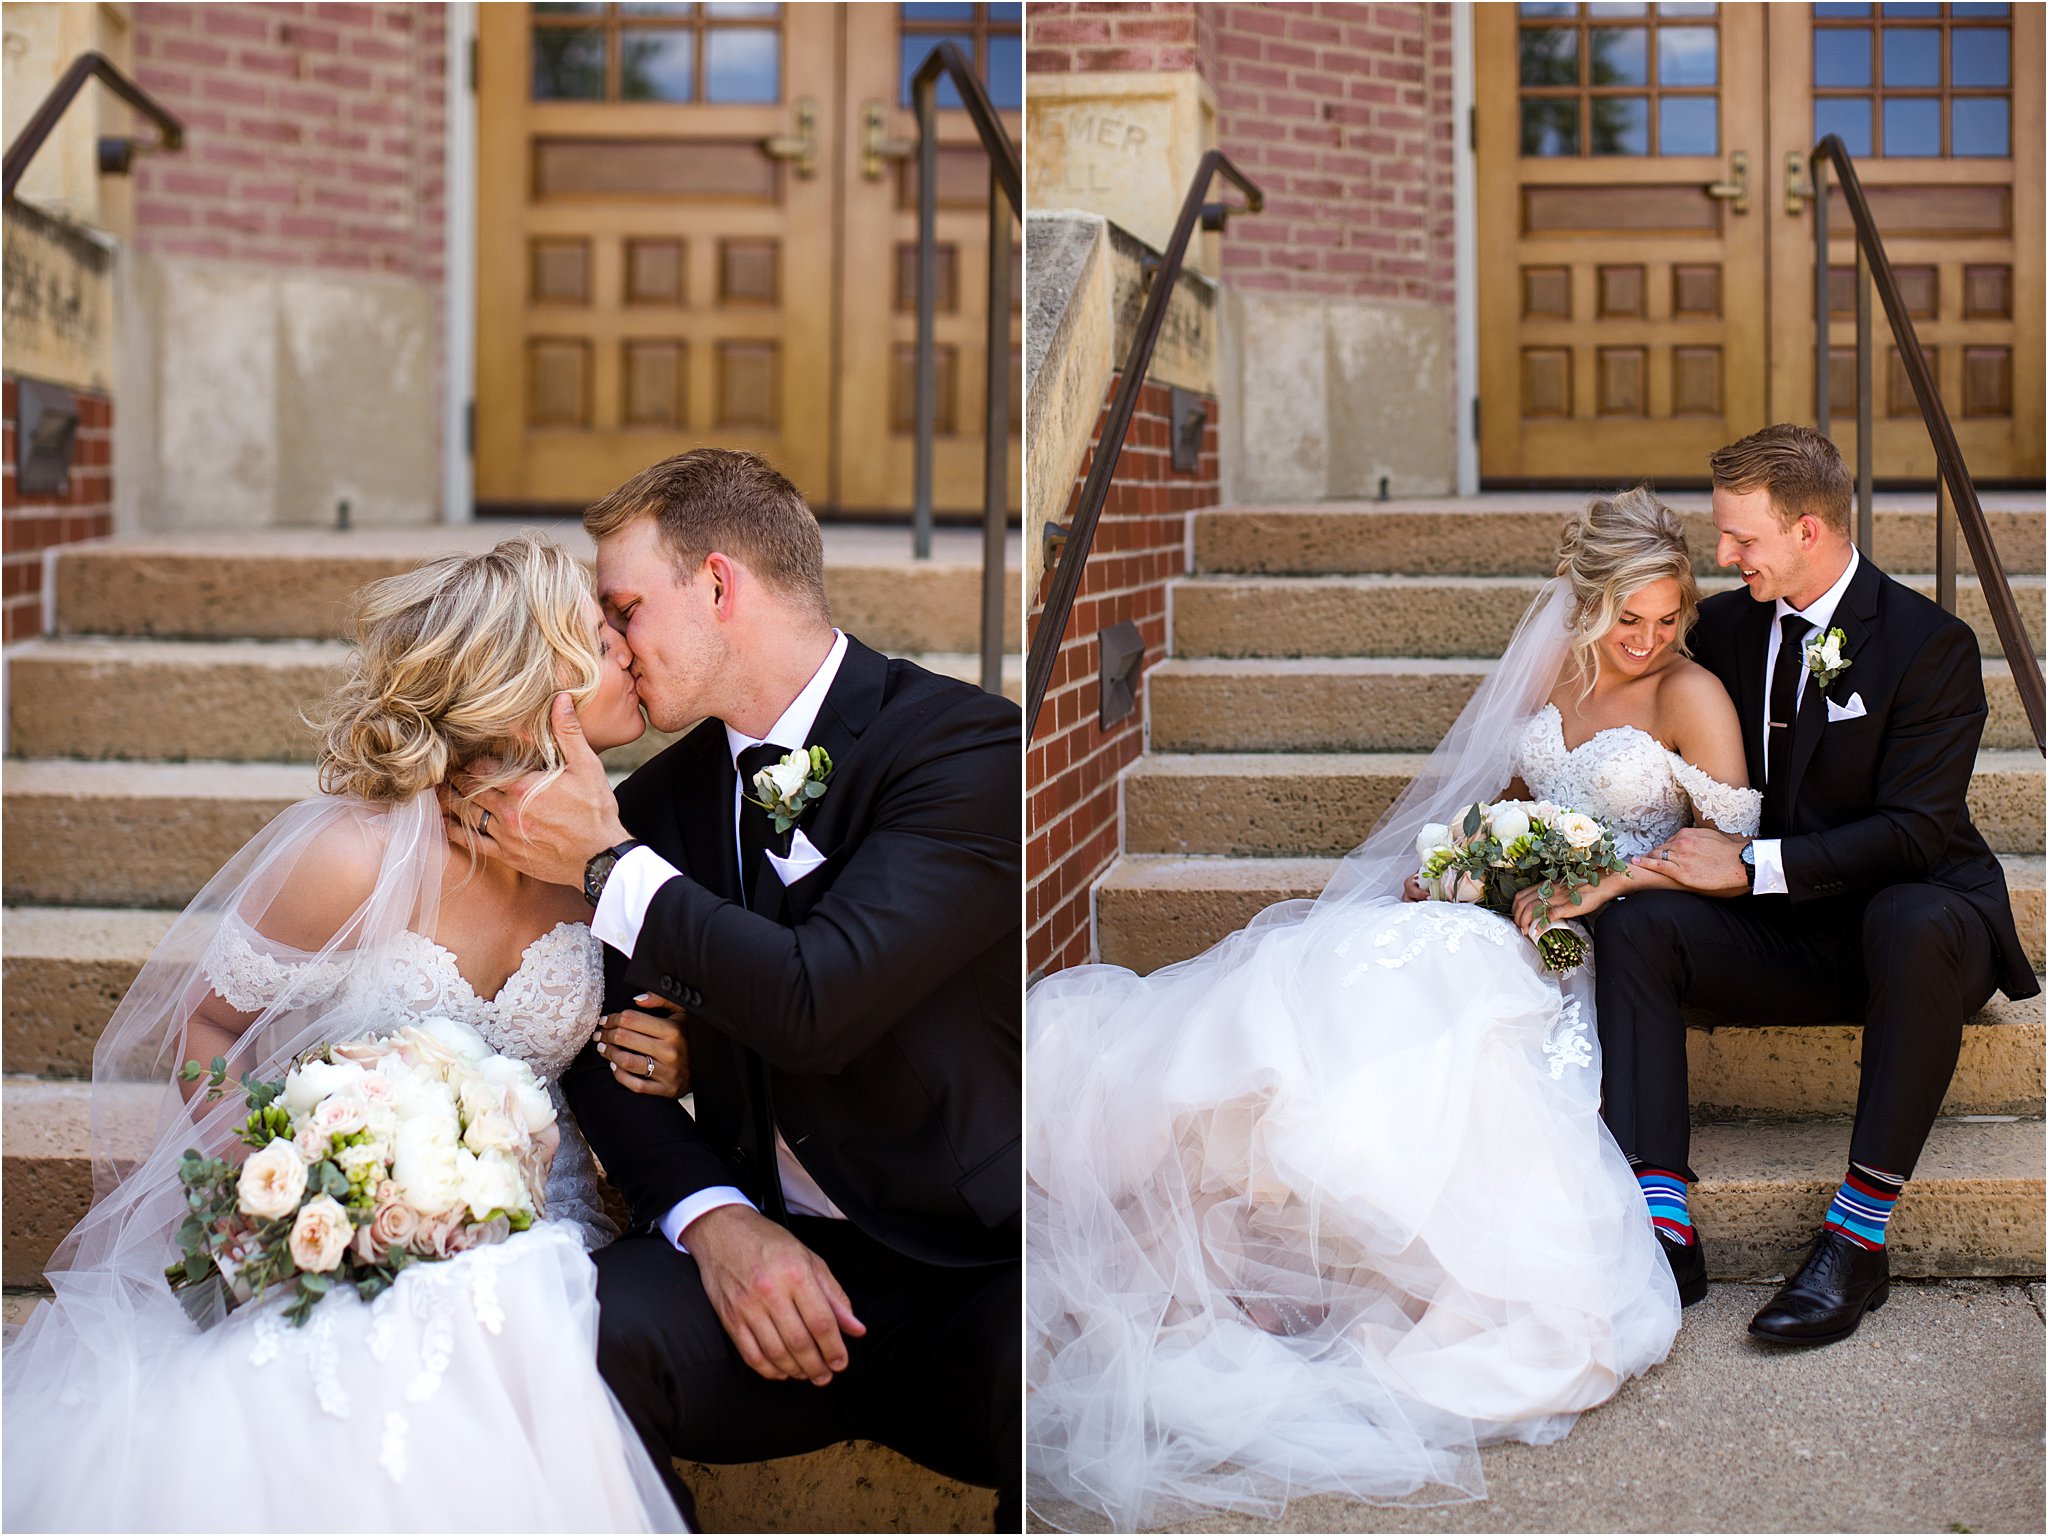 bride and groom sitting on steps together